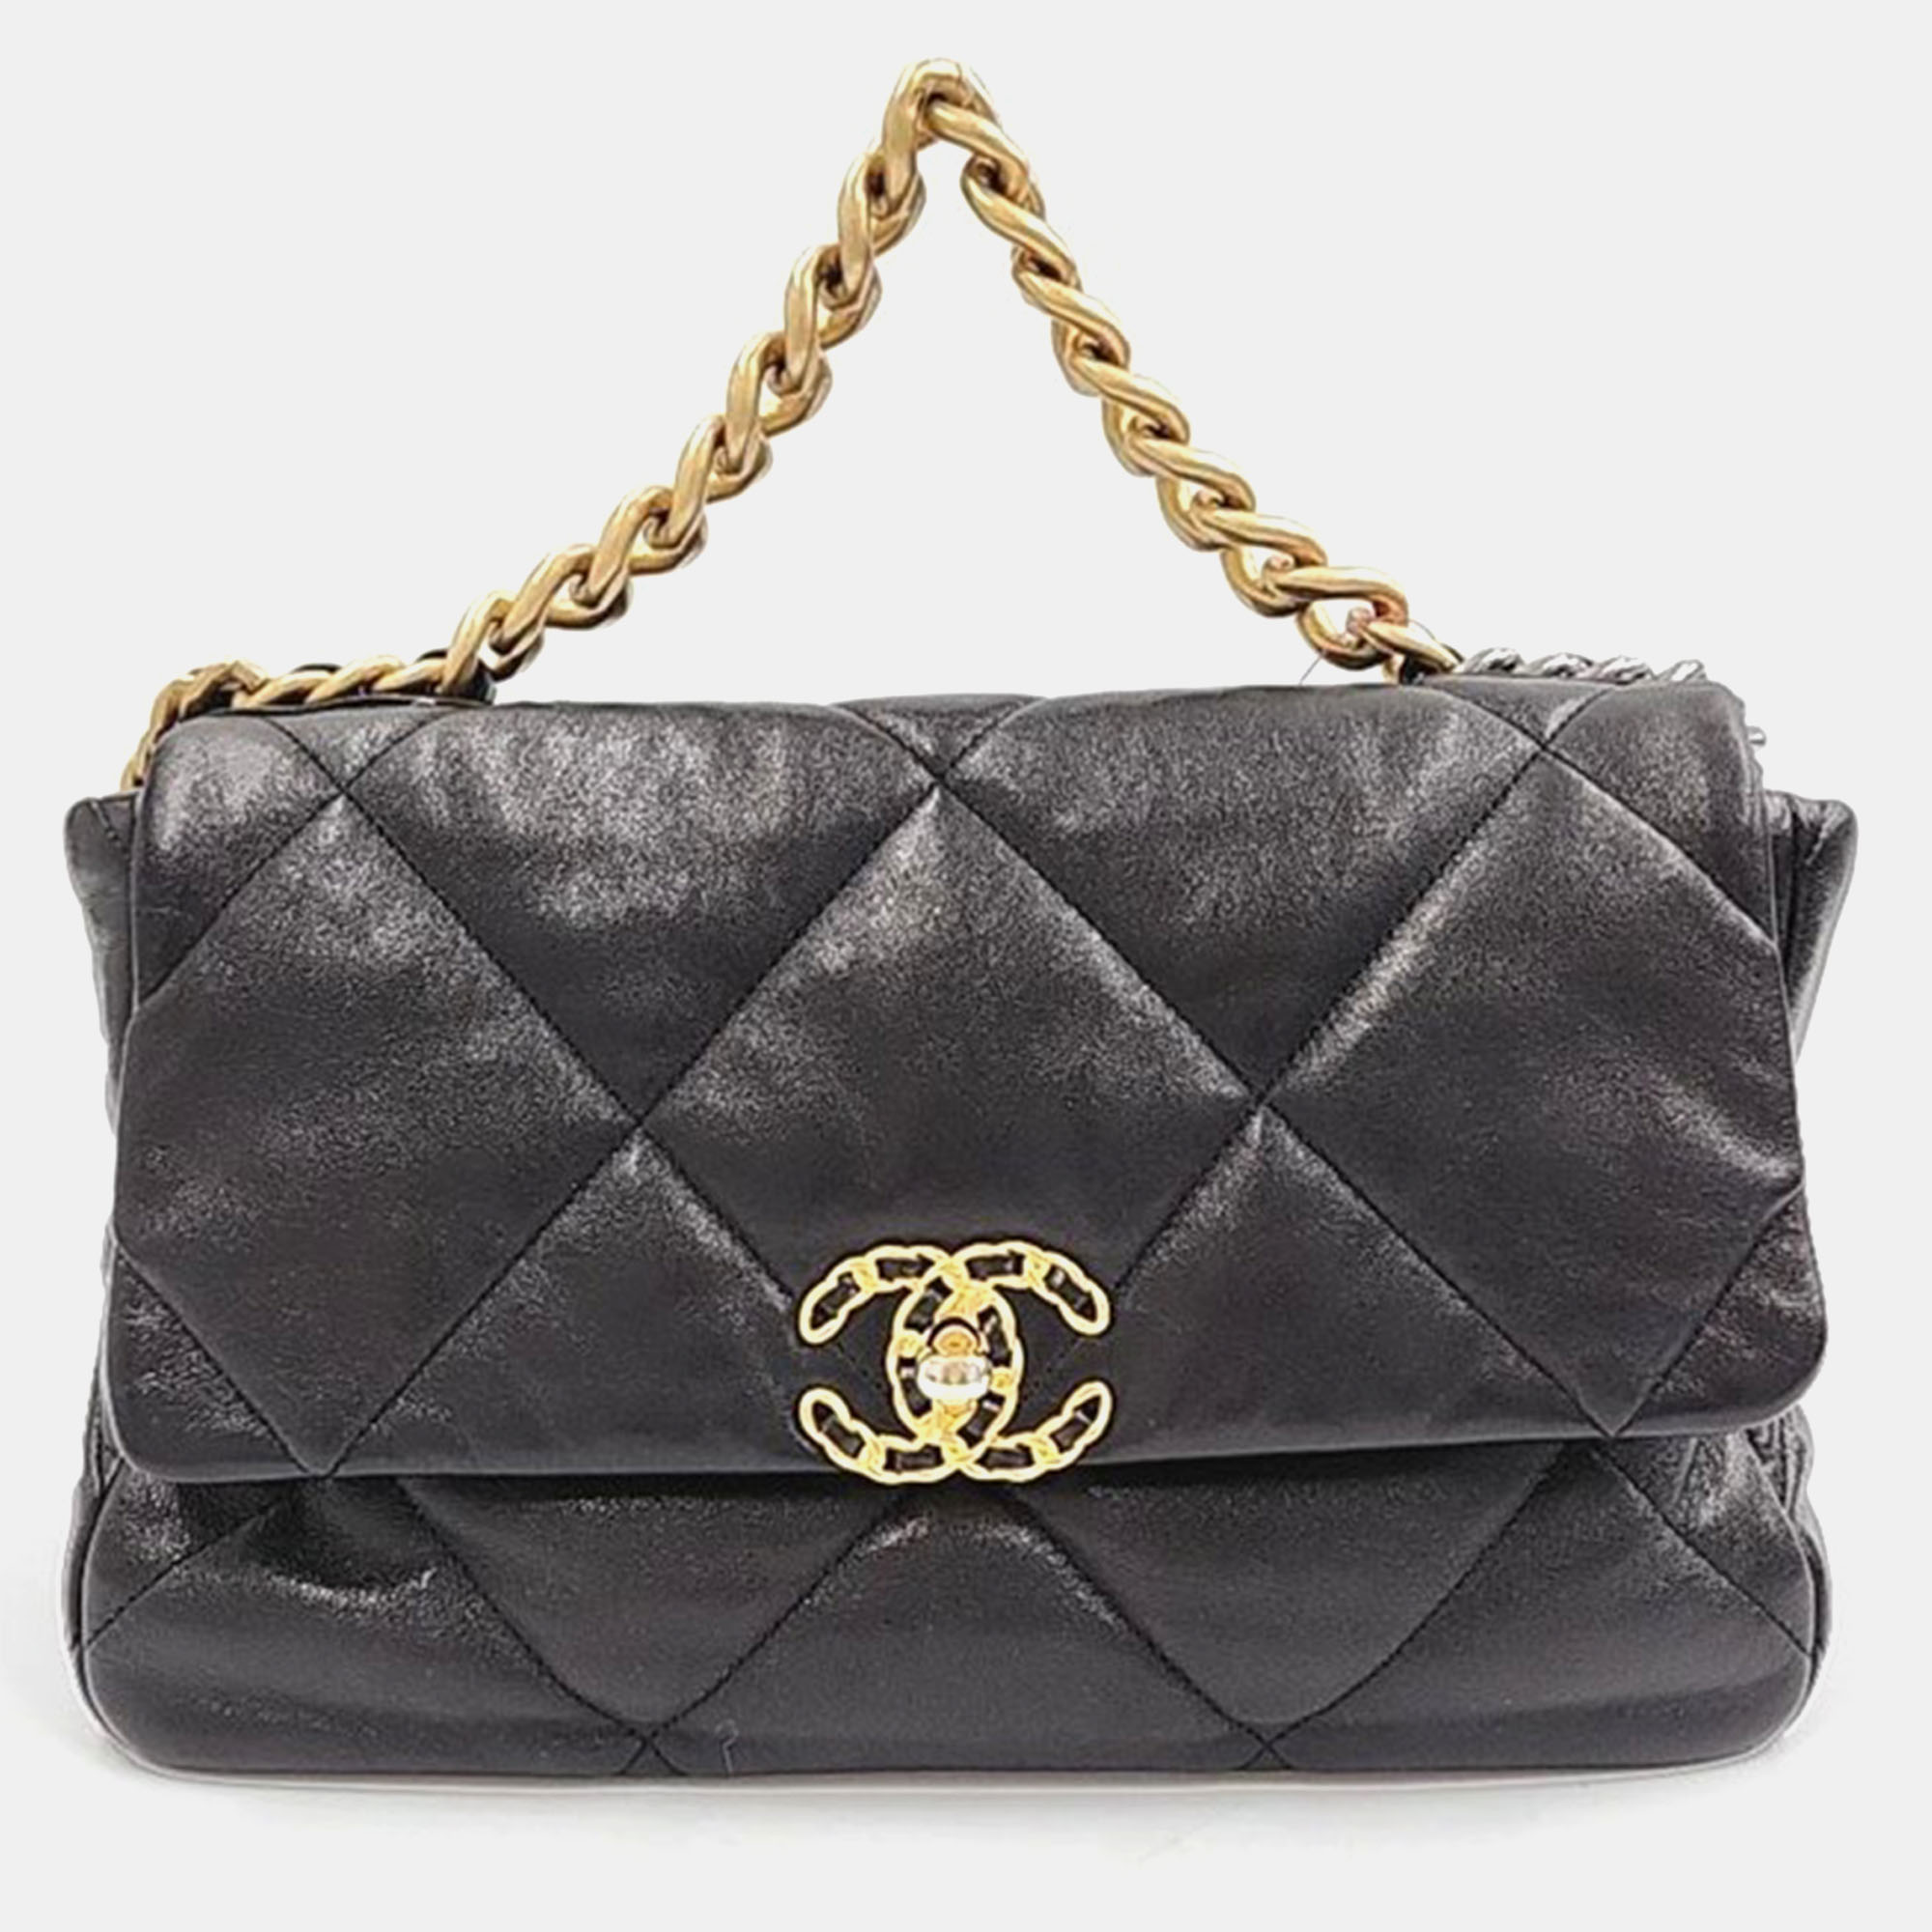 Chanel black leather 19 large flap bag